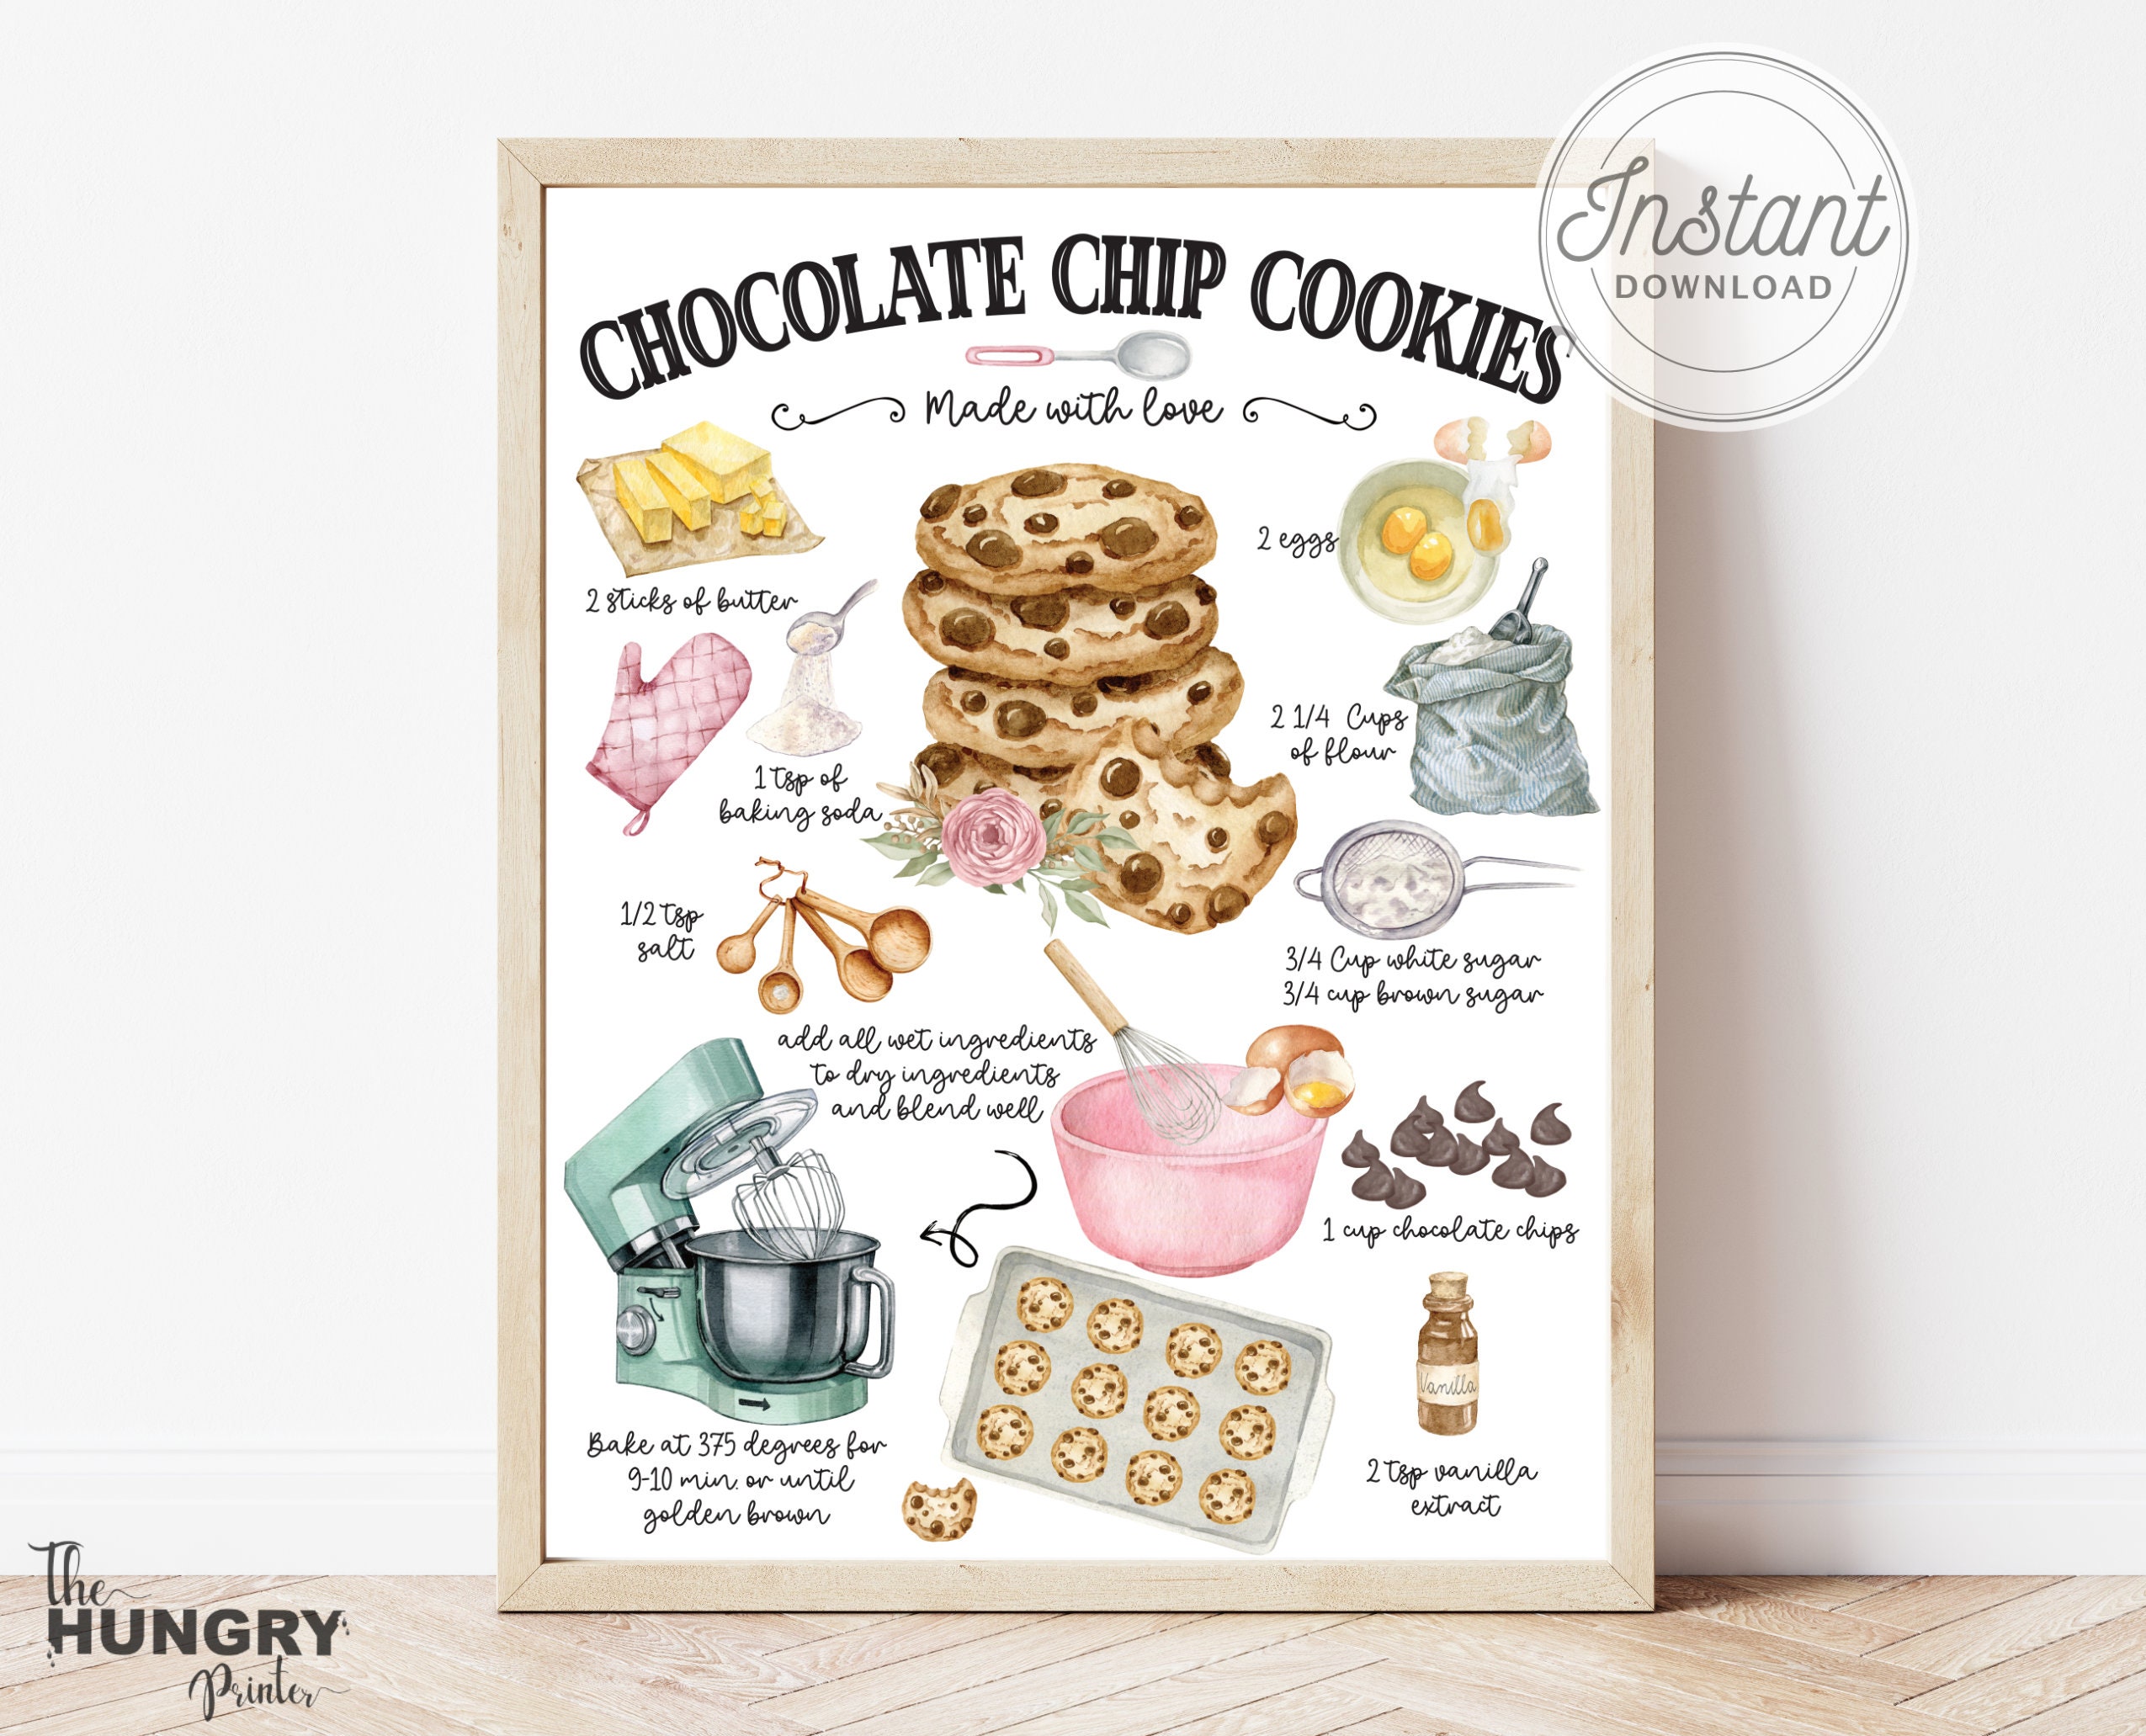 USA Large Cookie Sheet Pan – The Seasoned Gourmet